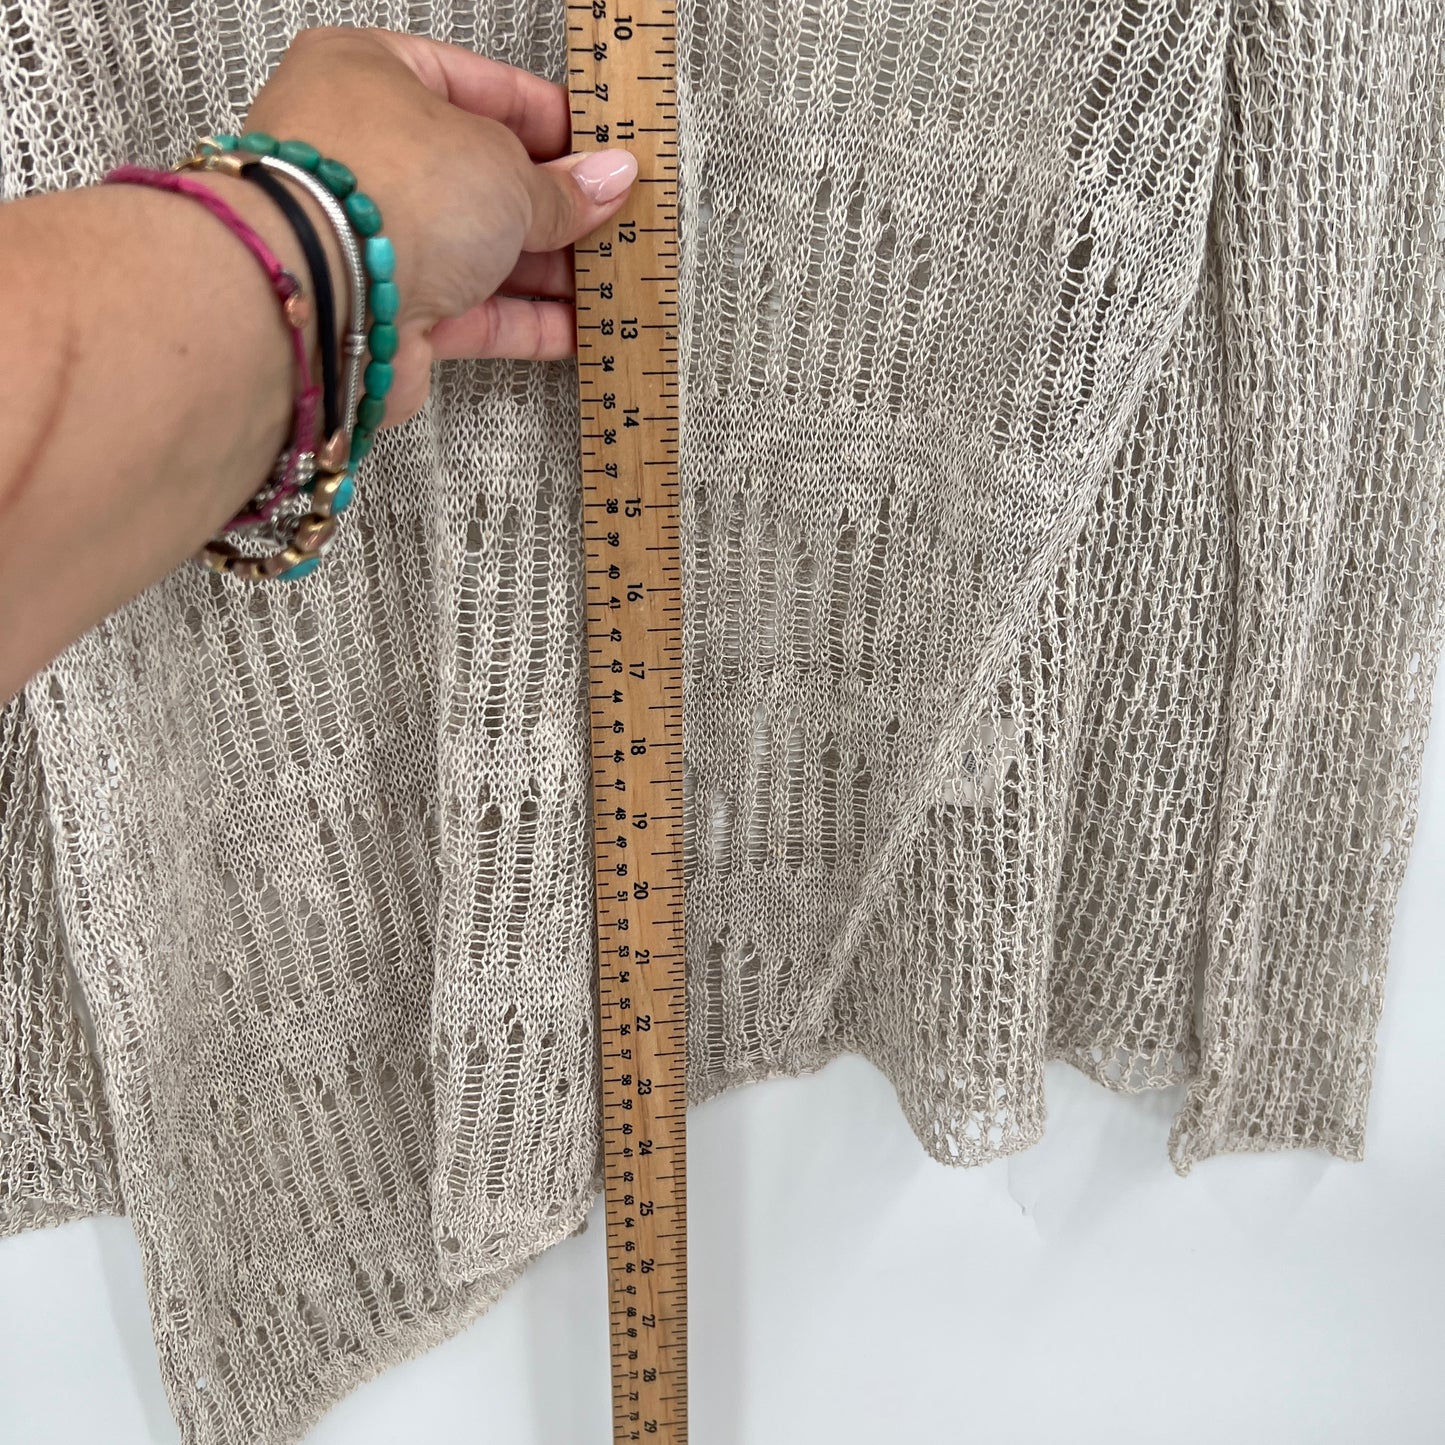 Eileen Fisher Loose Knit Linen Blend Asymmetrical Sweater PL